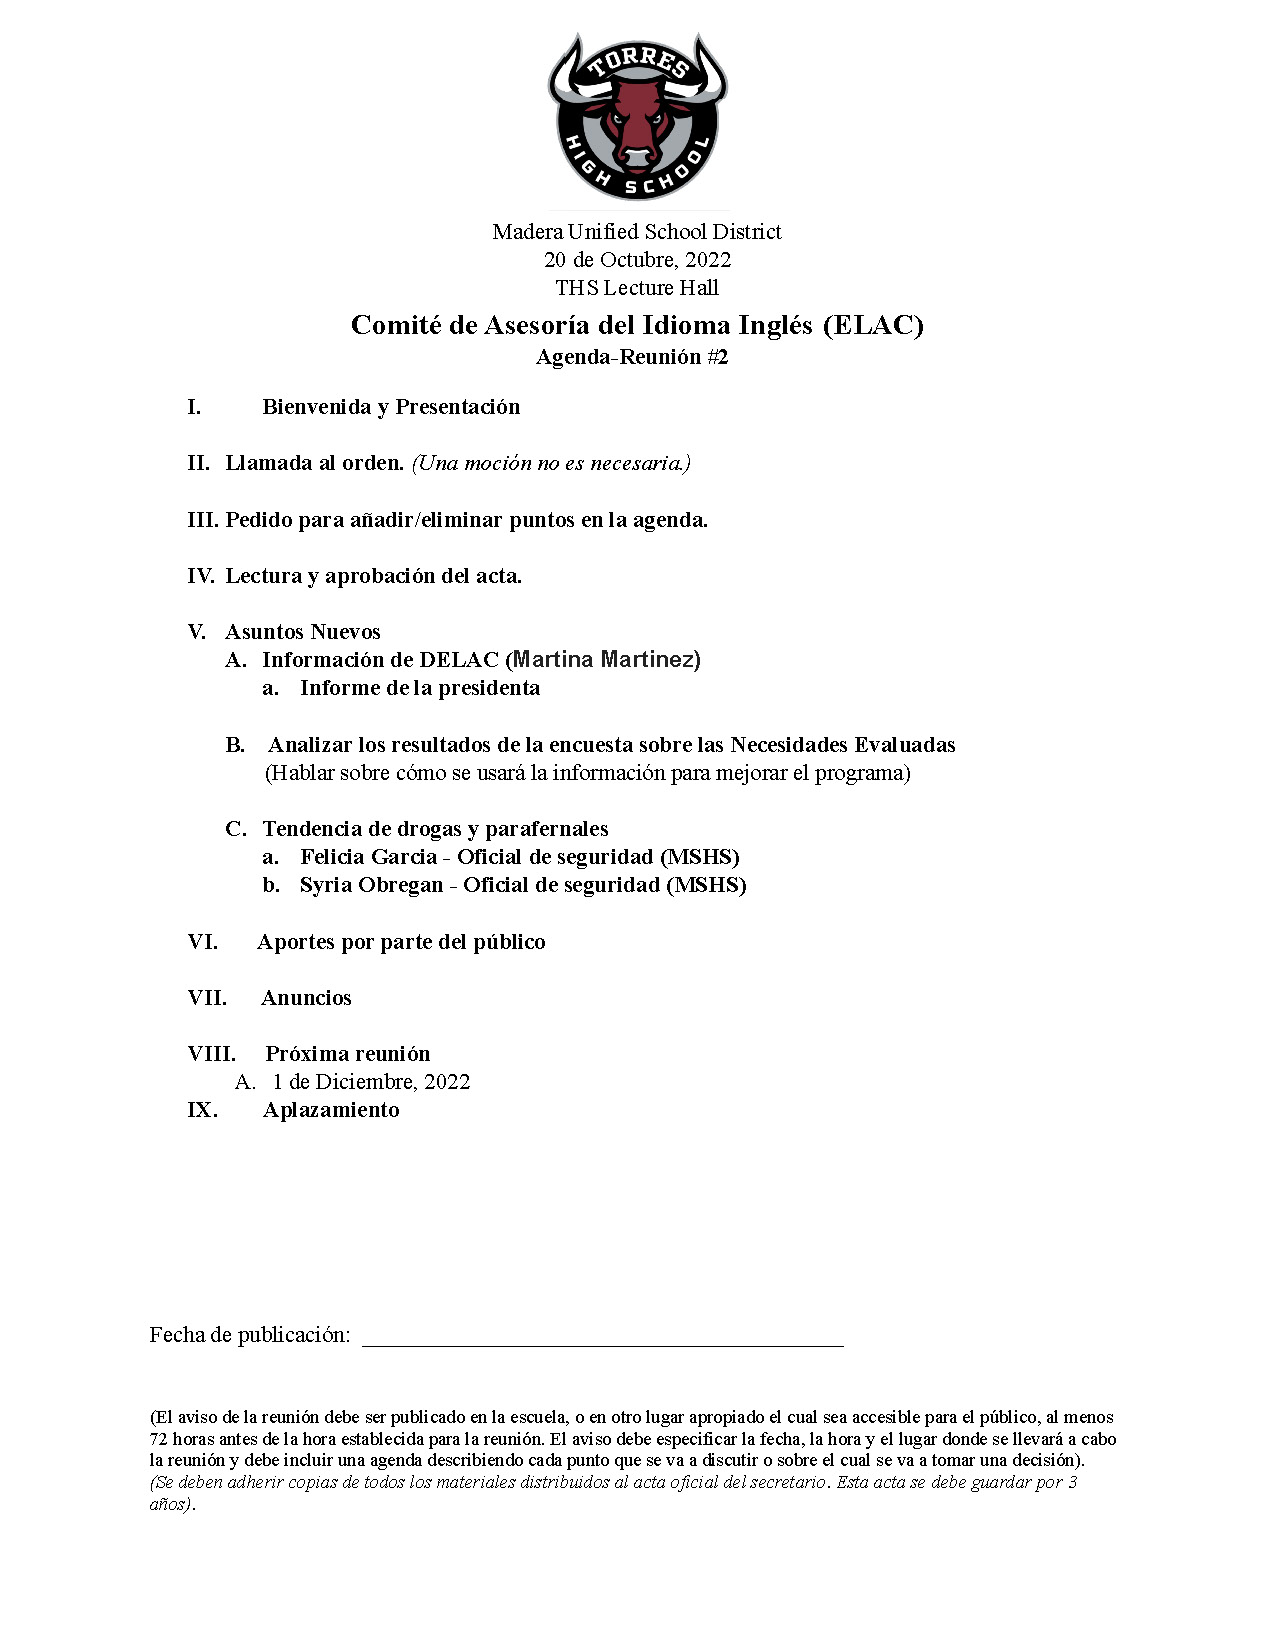 ELAC-2 Agenda THS 10-20-2022 miniatura del Español